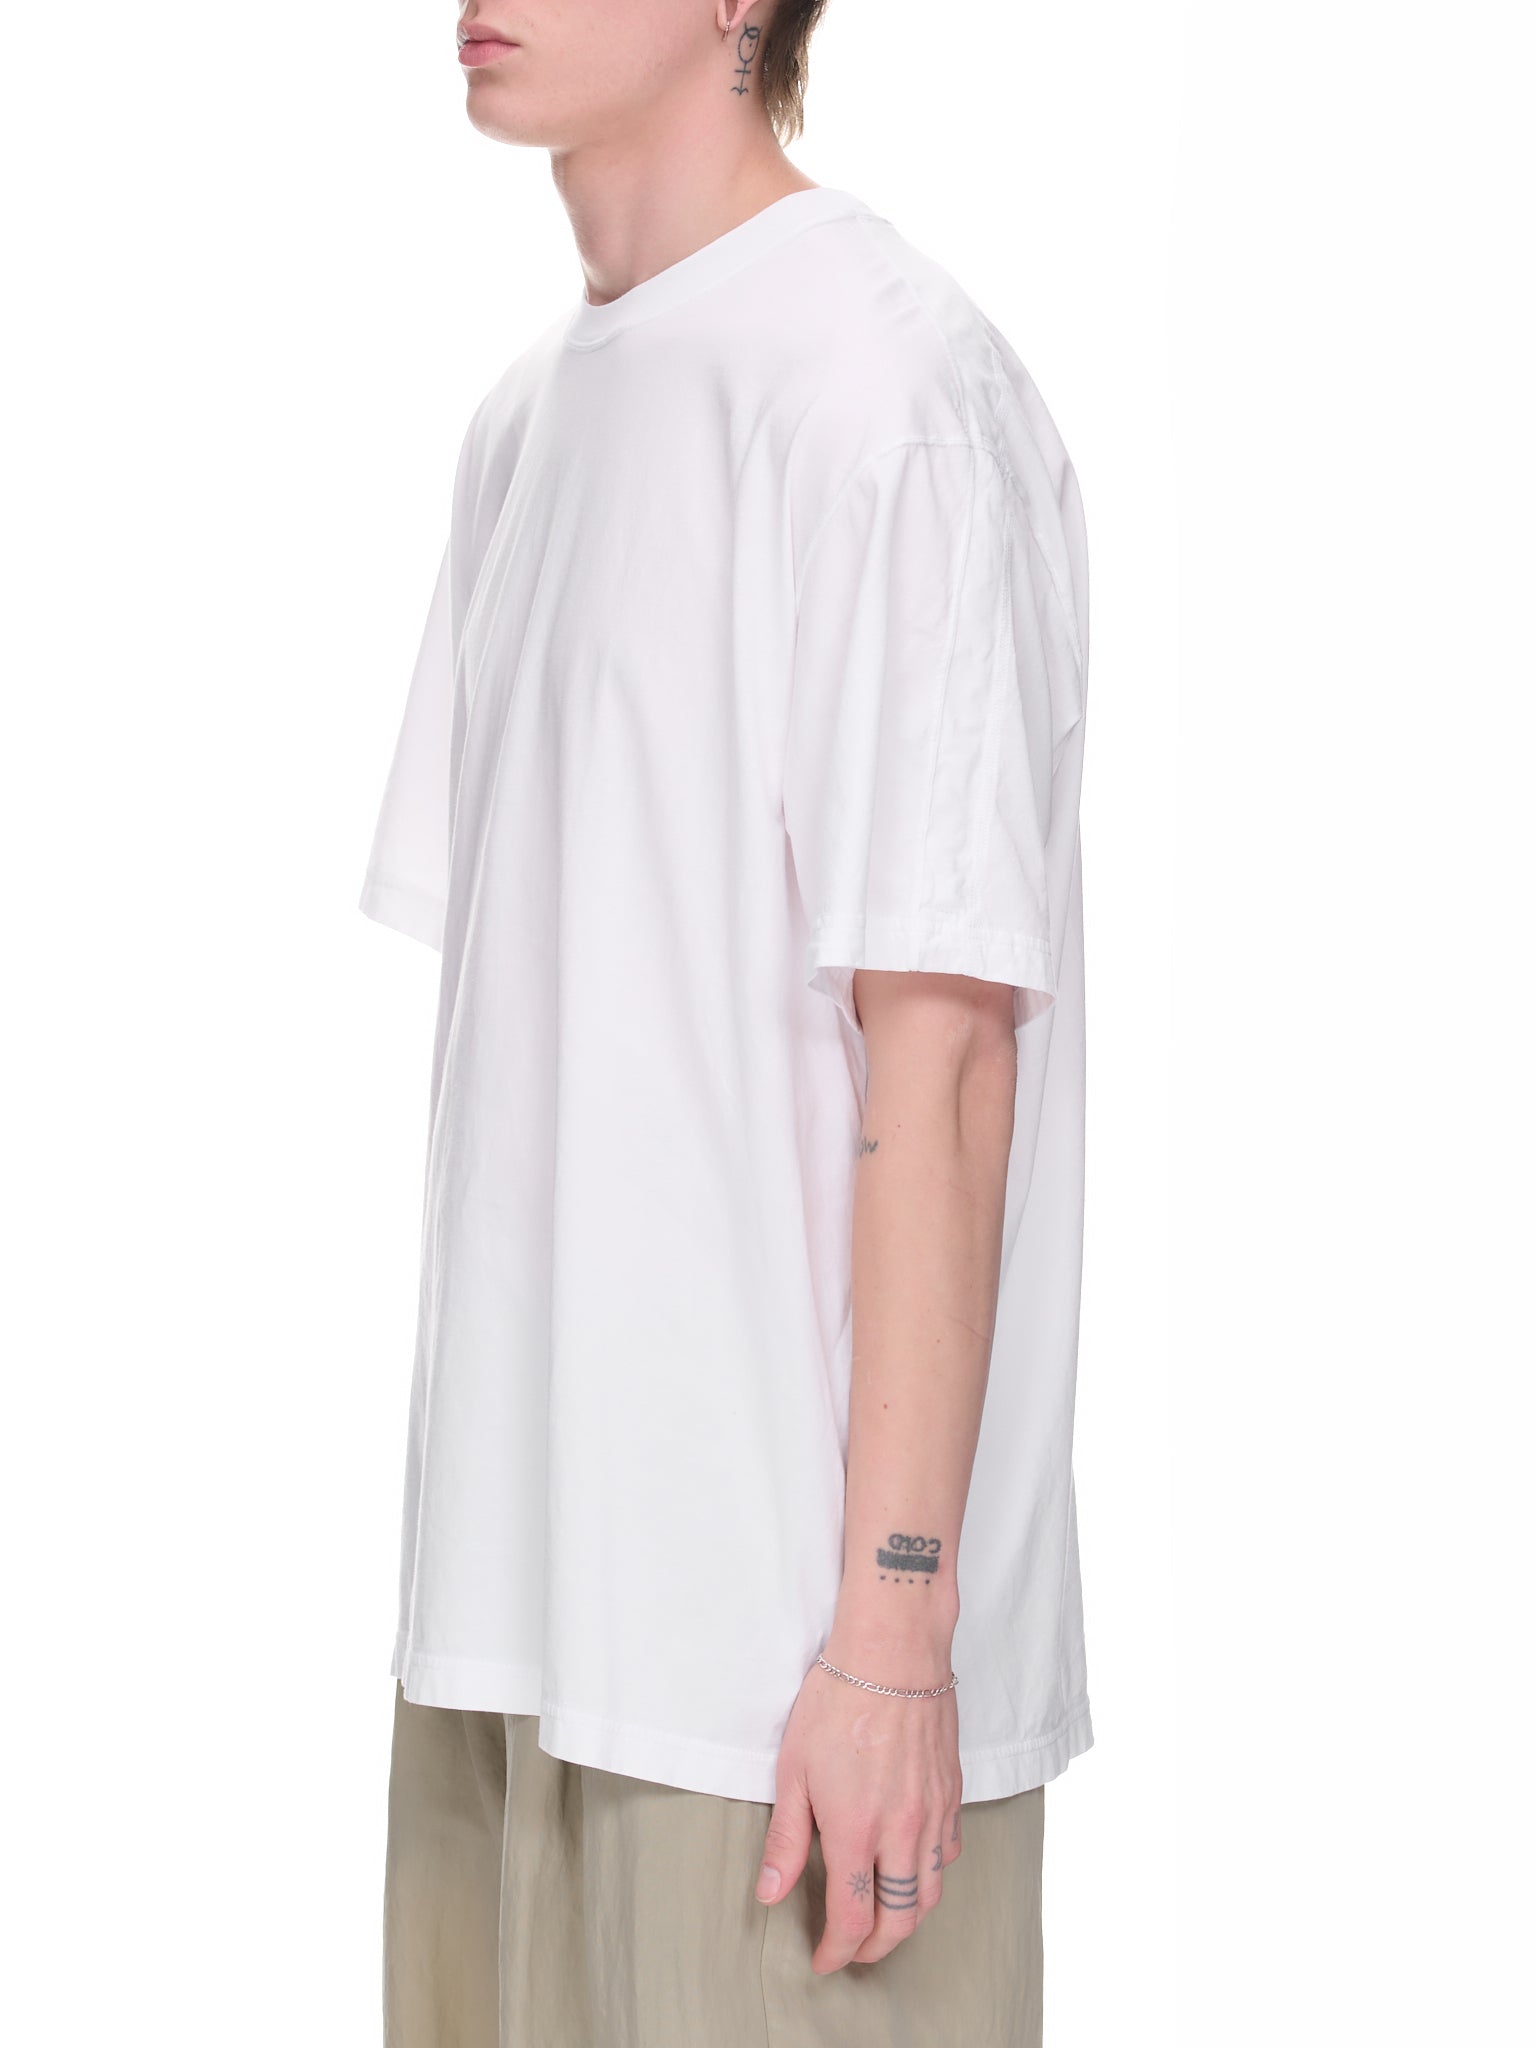 Vessel T-Shirt (VJ31-326-WHITE)